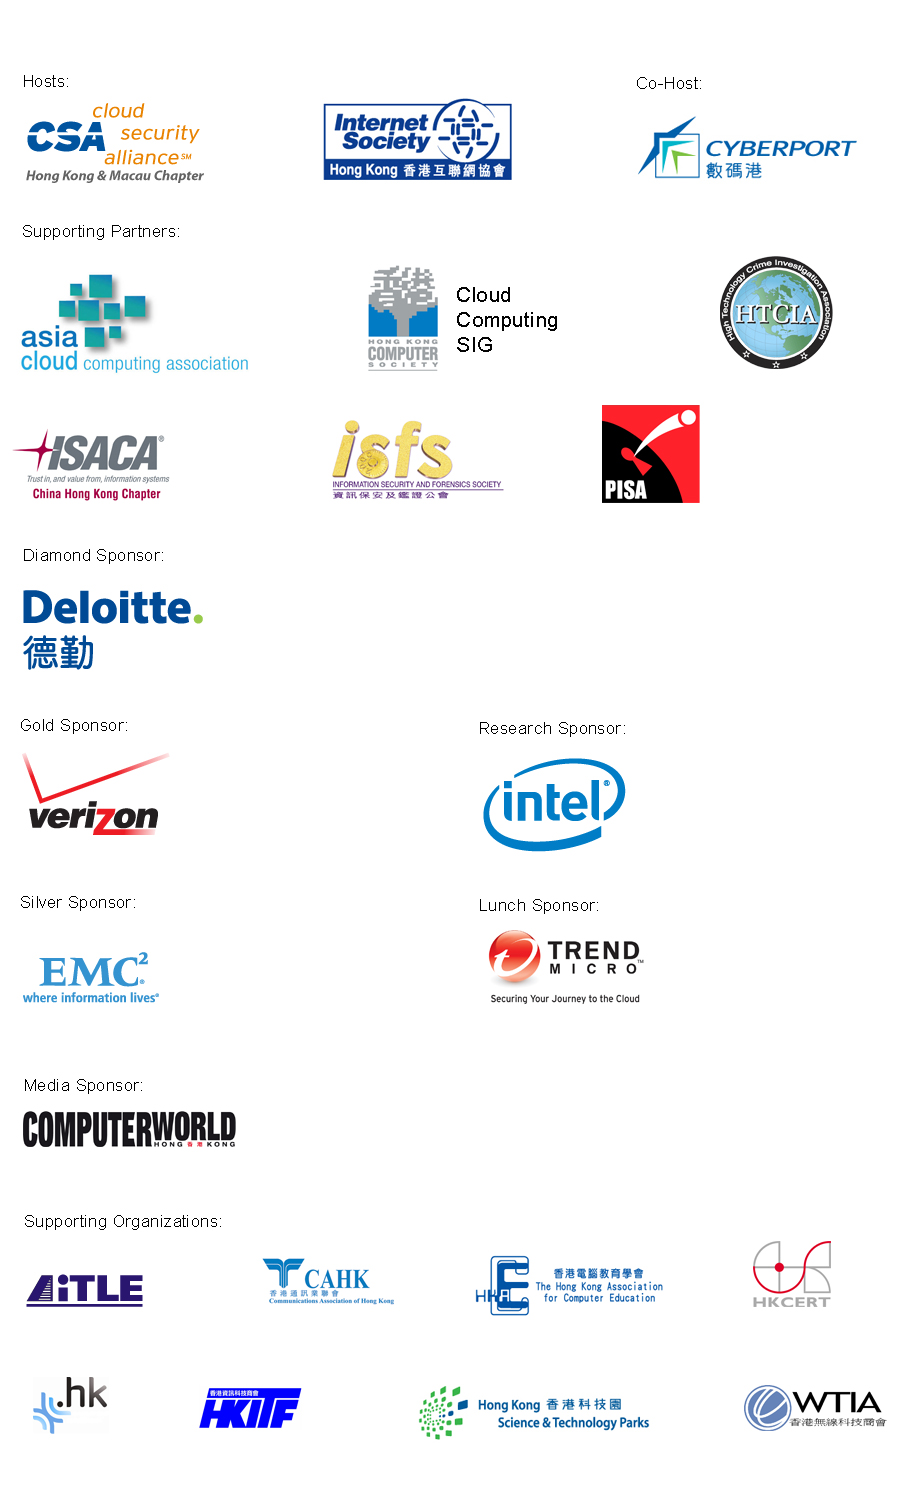 Hosts - CSA, ISOC HK, Cyberport/ Supporting Partners - ASIA Cloud, HKCS, HTCIA, ISACA, isfs, PISA, Diamond Sponsor - Deloitte/ Gold Sponsor - Verizon/ Silver Sponsor - EMC square/ Research Sponsor - Intel/ Lunch Sponsor - Trend Micro/ Media Sponsor - Computer World/ Supporting Organization - iTLE, CAHK, HKACE, HKCERT, ITC HK, HKITF, HKSTPC, WTIA